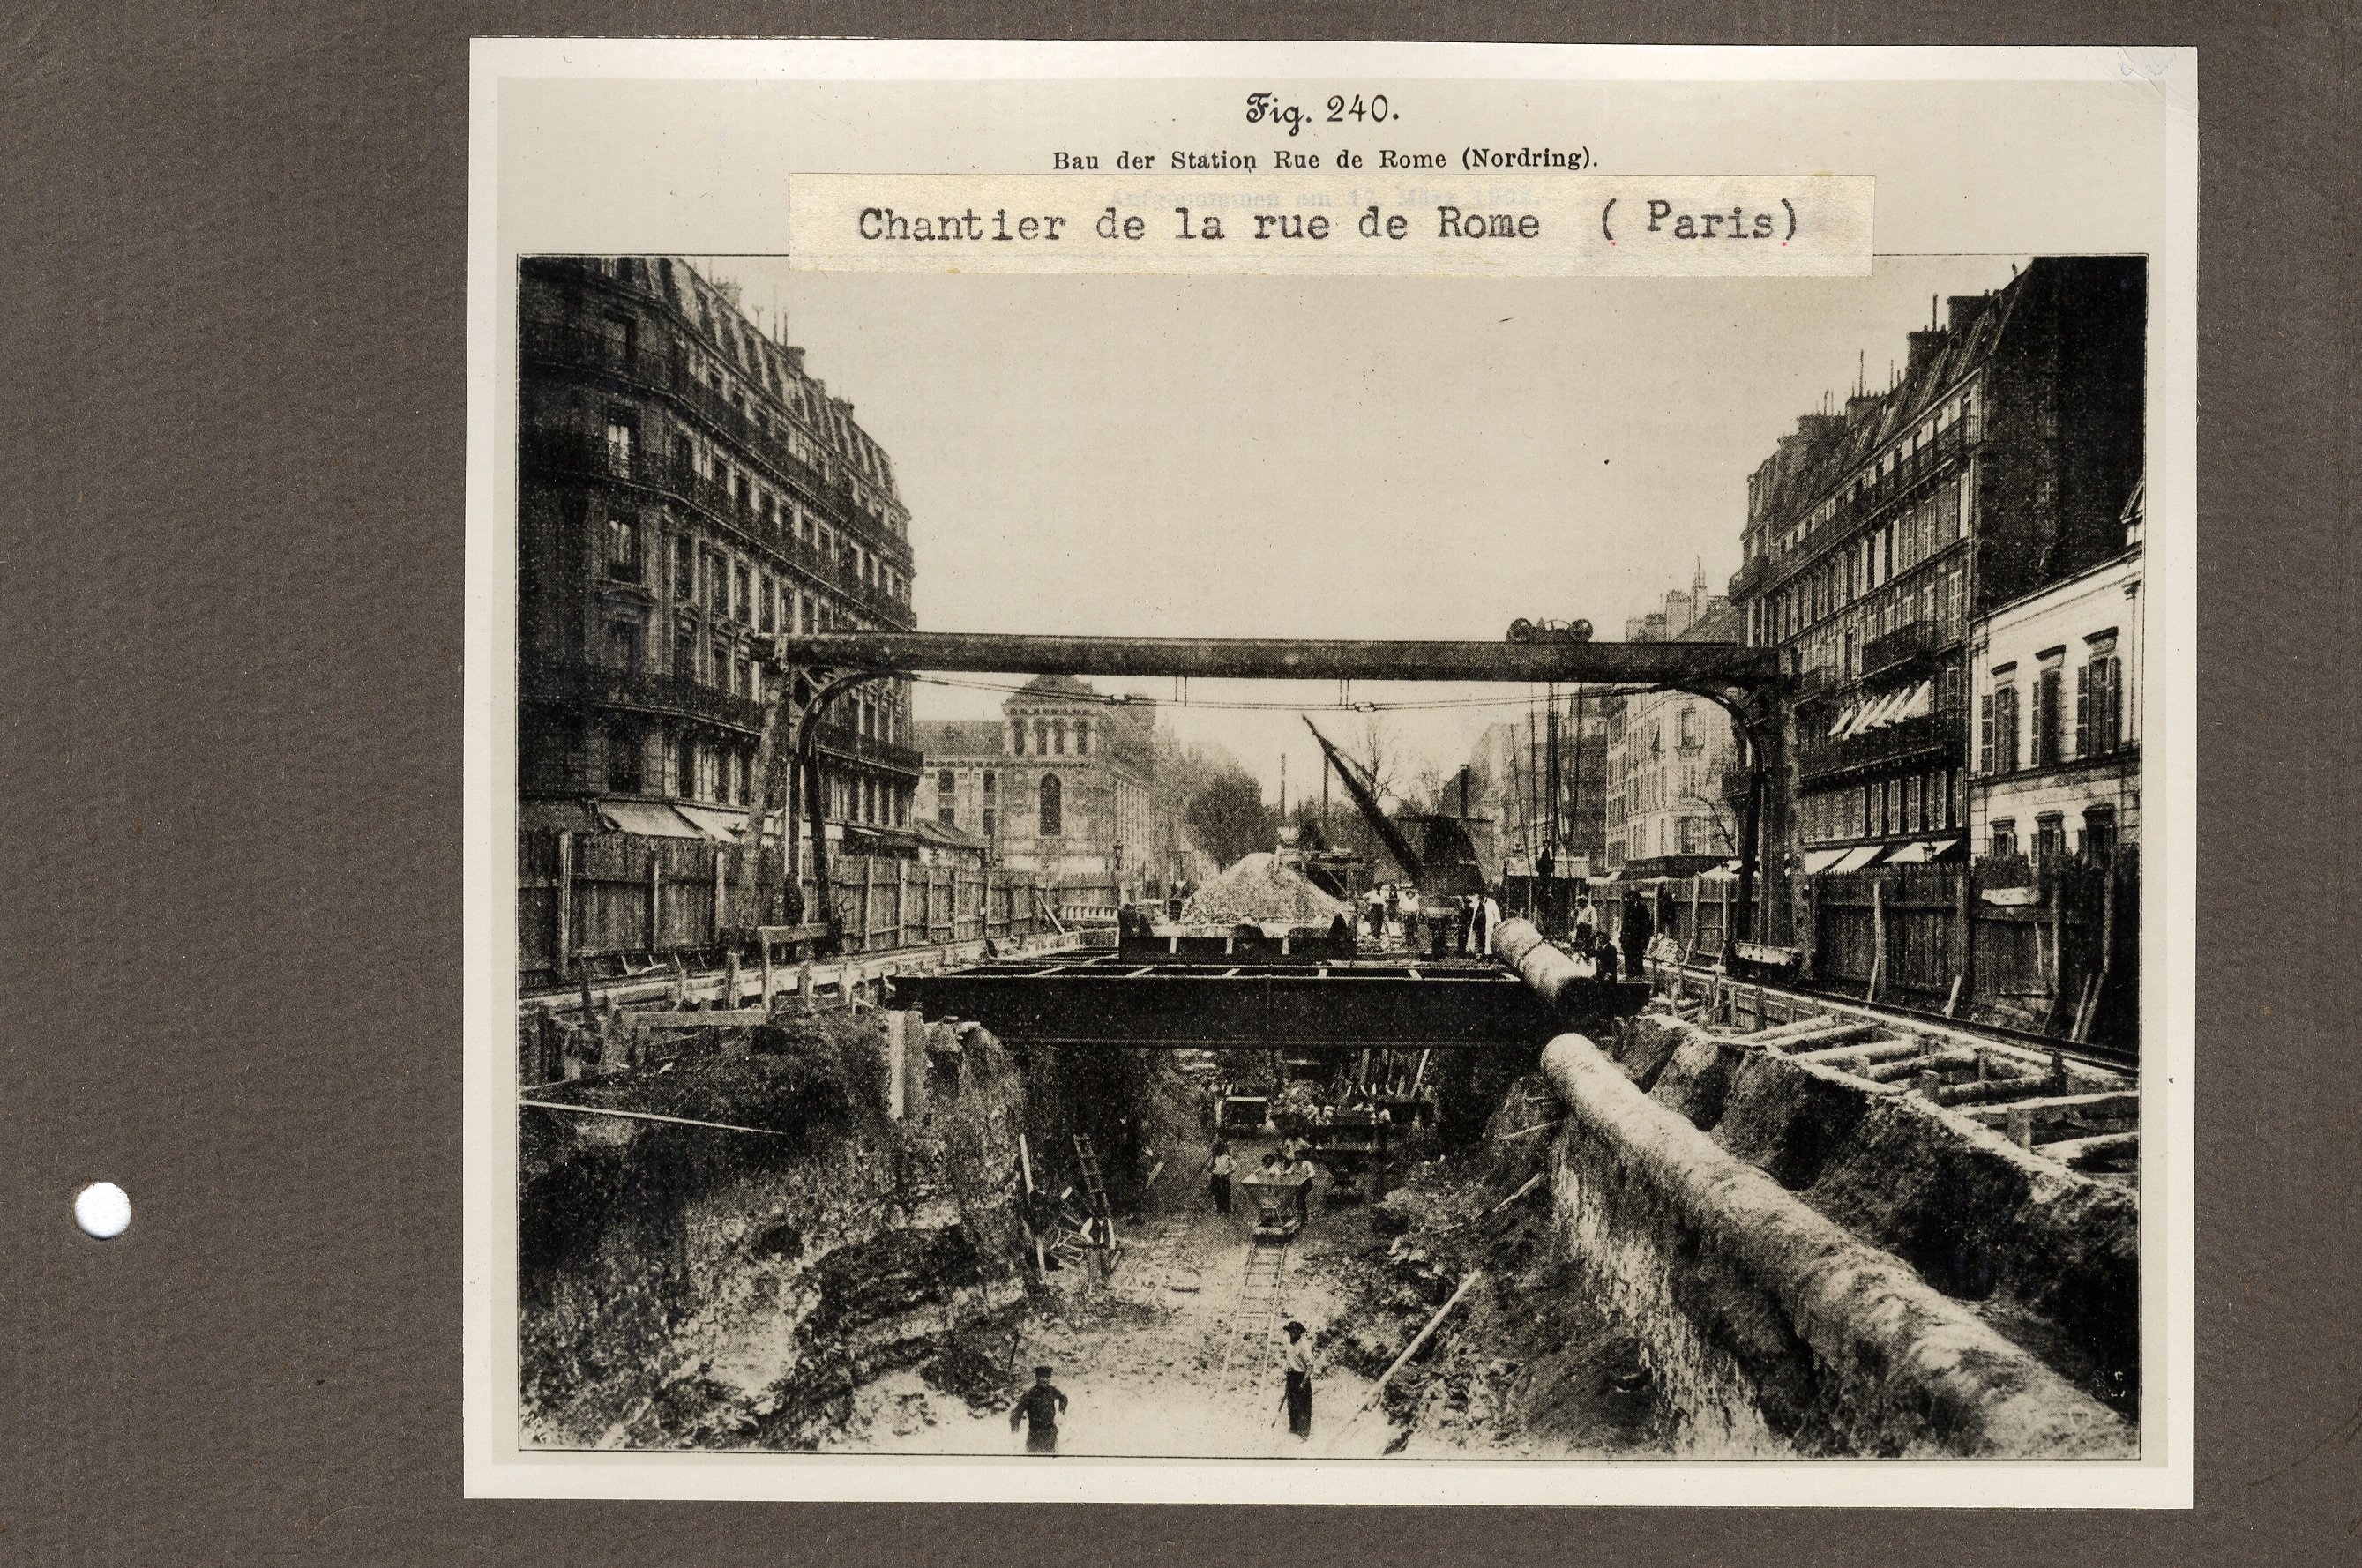 Example of similar railway construction works in Paris, Rue de Rome